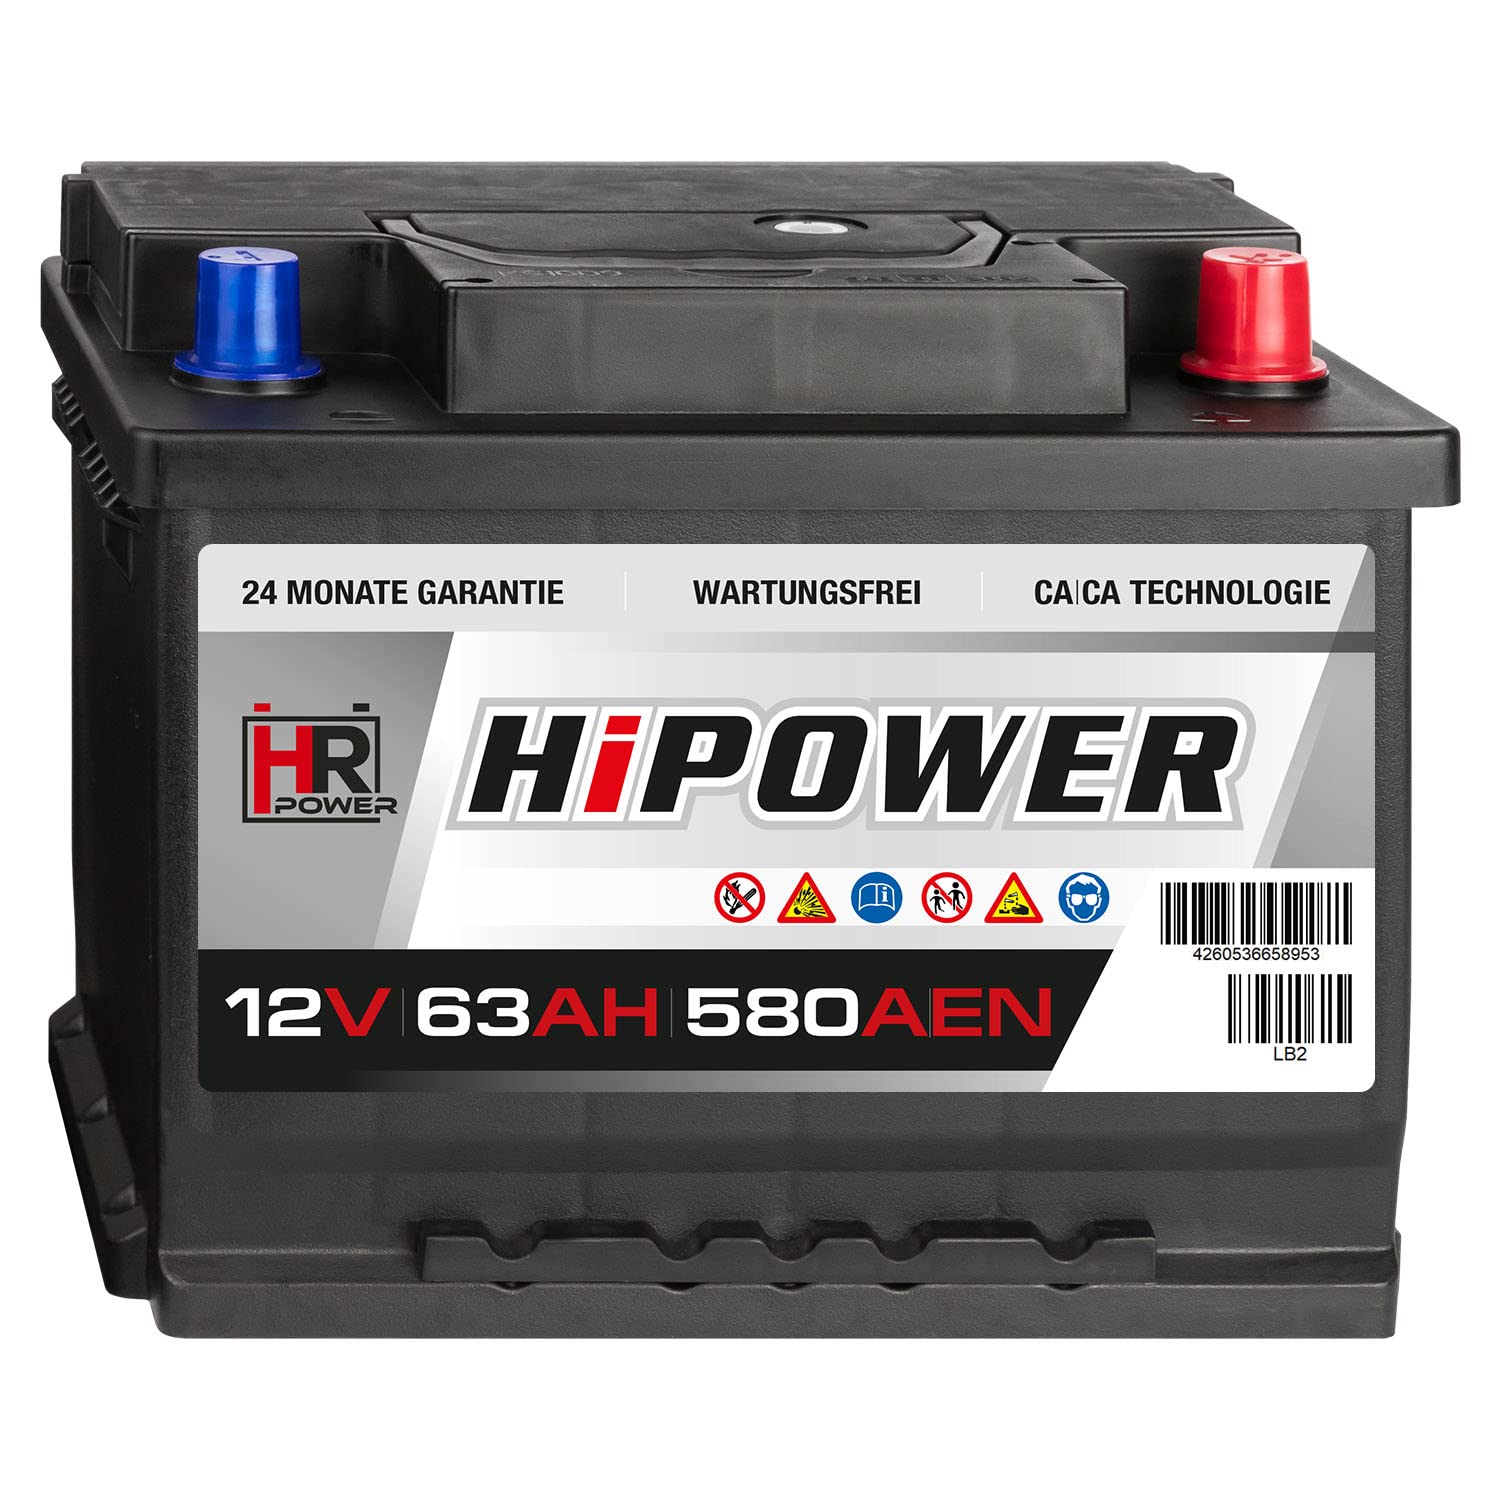 HR HiPower Autobatterie 12V 63Ah 580A/EN Starterbatterie ersetzt 44Ah 45Ah 46Ah 50Ah 60Ah 62Ah 65Ah von HR-Power